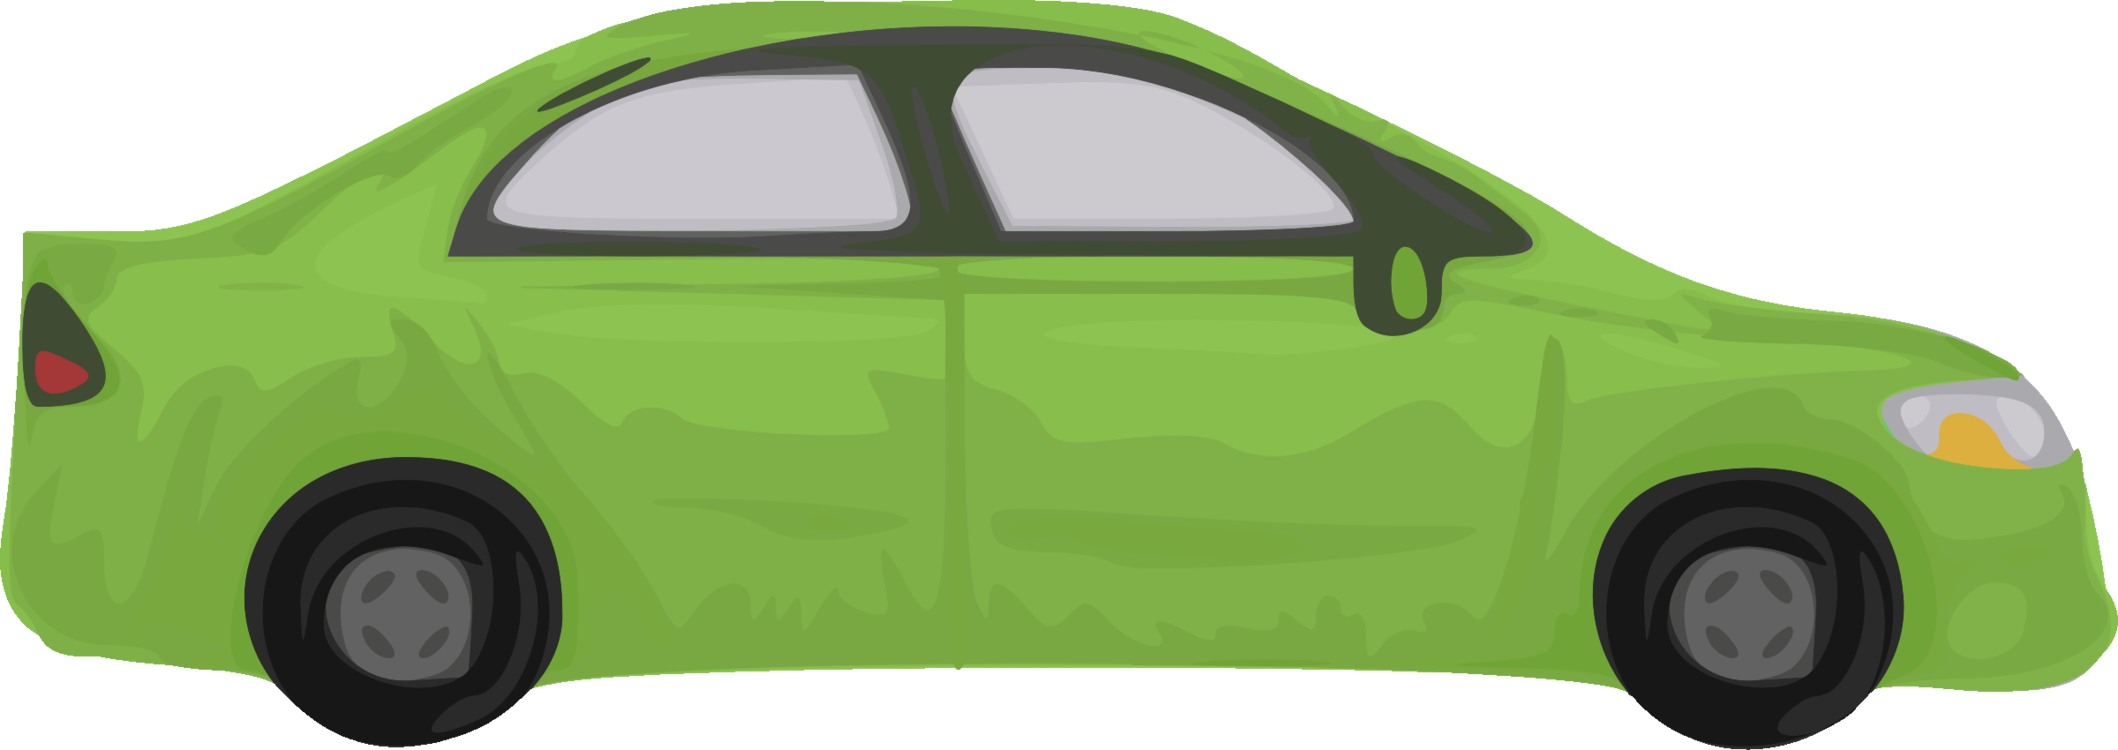 Grass,Compact Car,Car